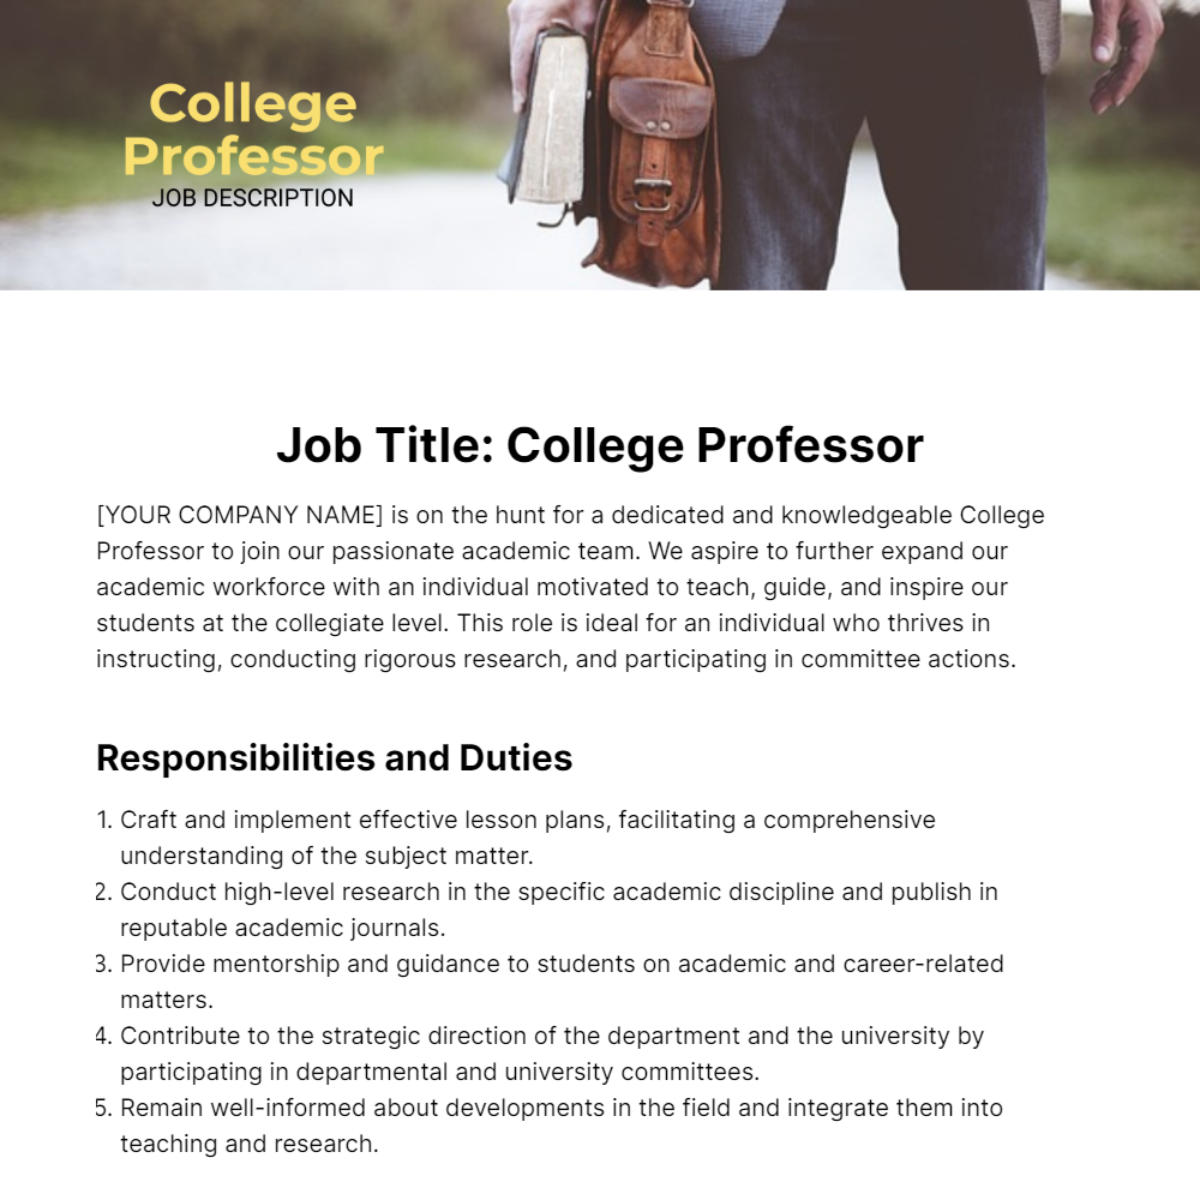 College Professor Job Description Template